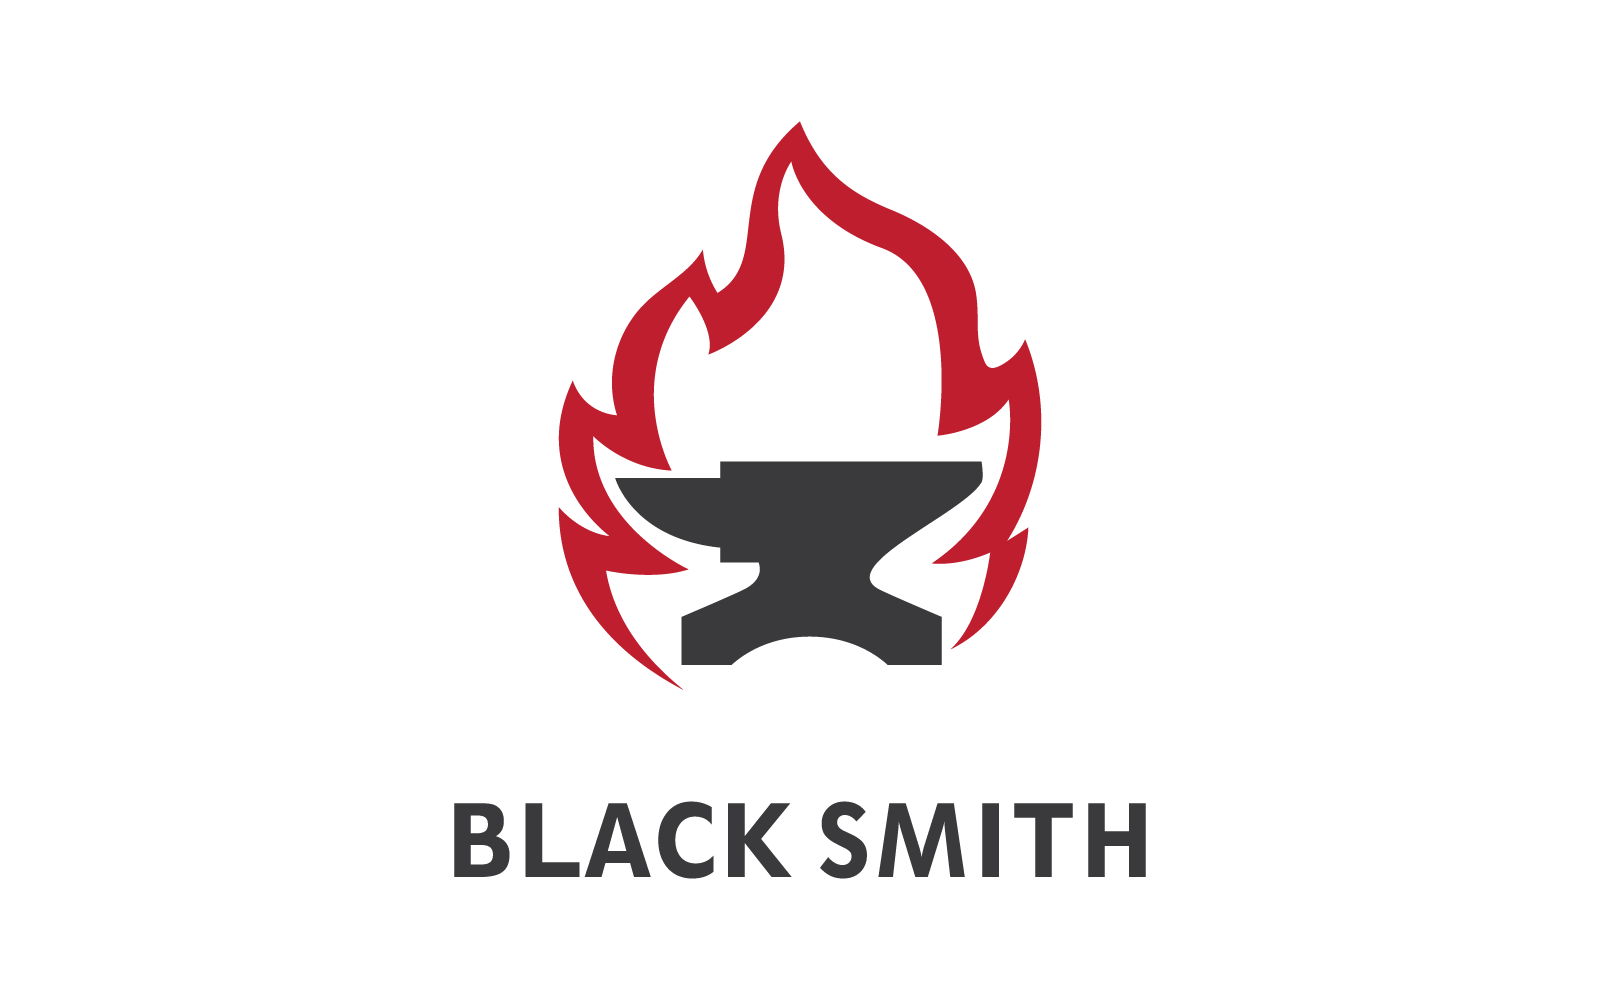 Blacksmith illustration logo vector flat design template eps 10